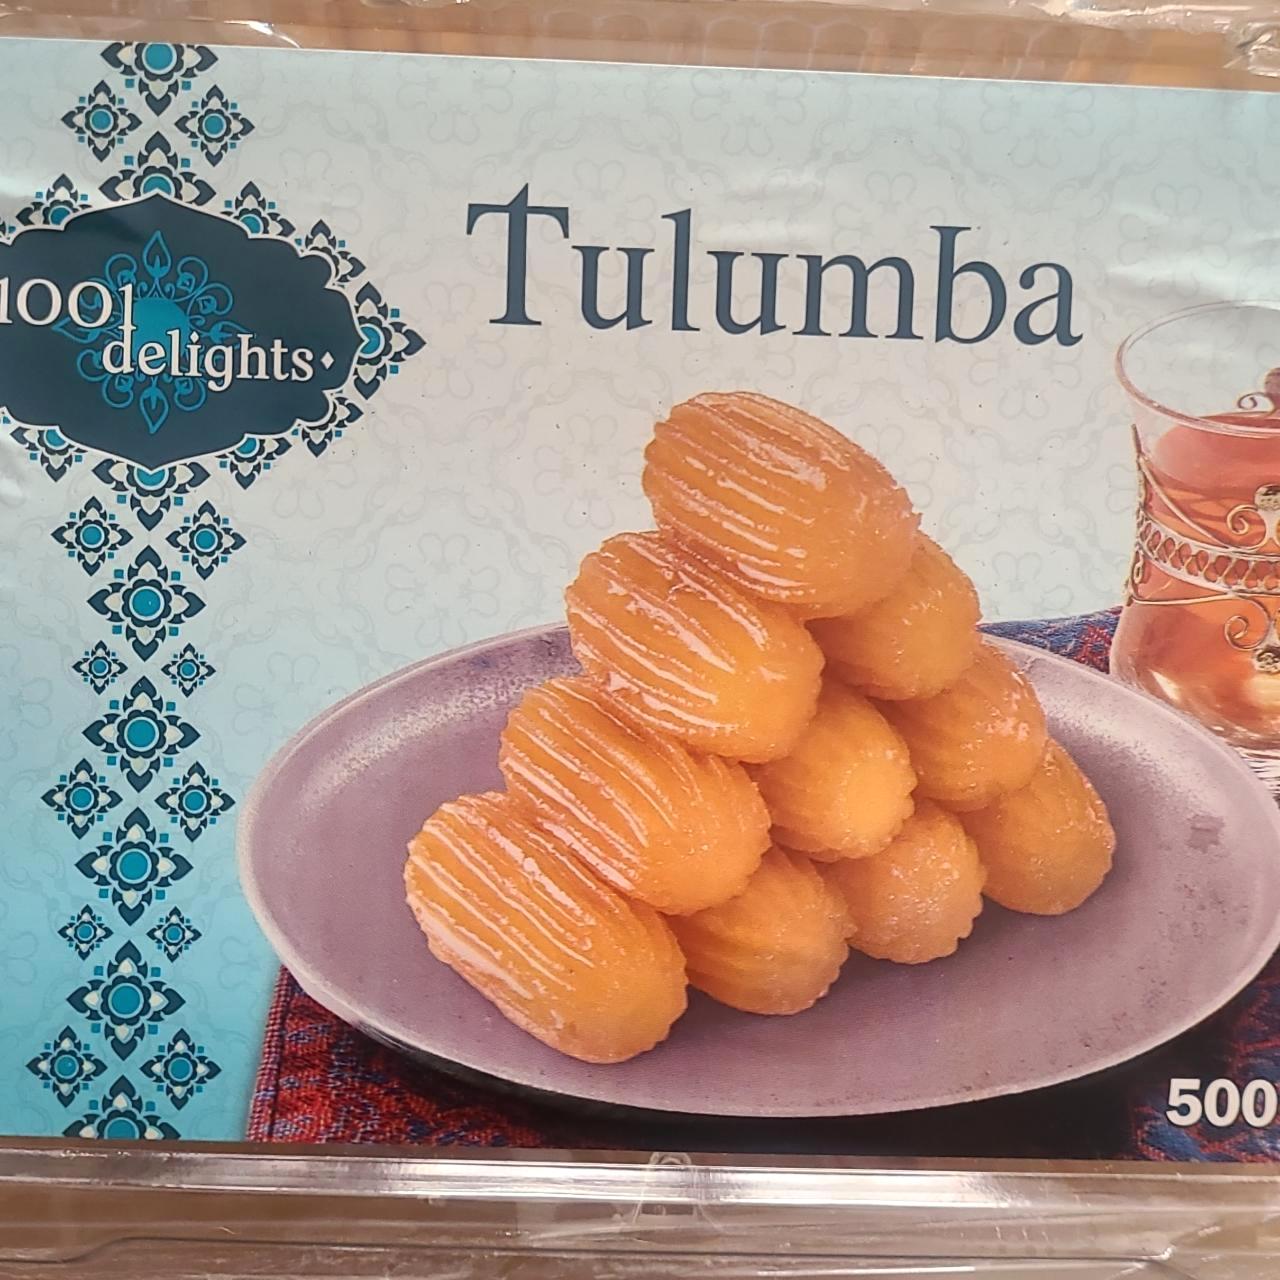 Képek - Tulumba 1001 delights